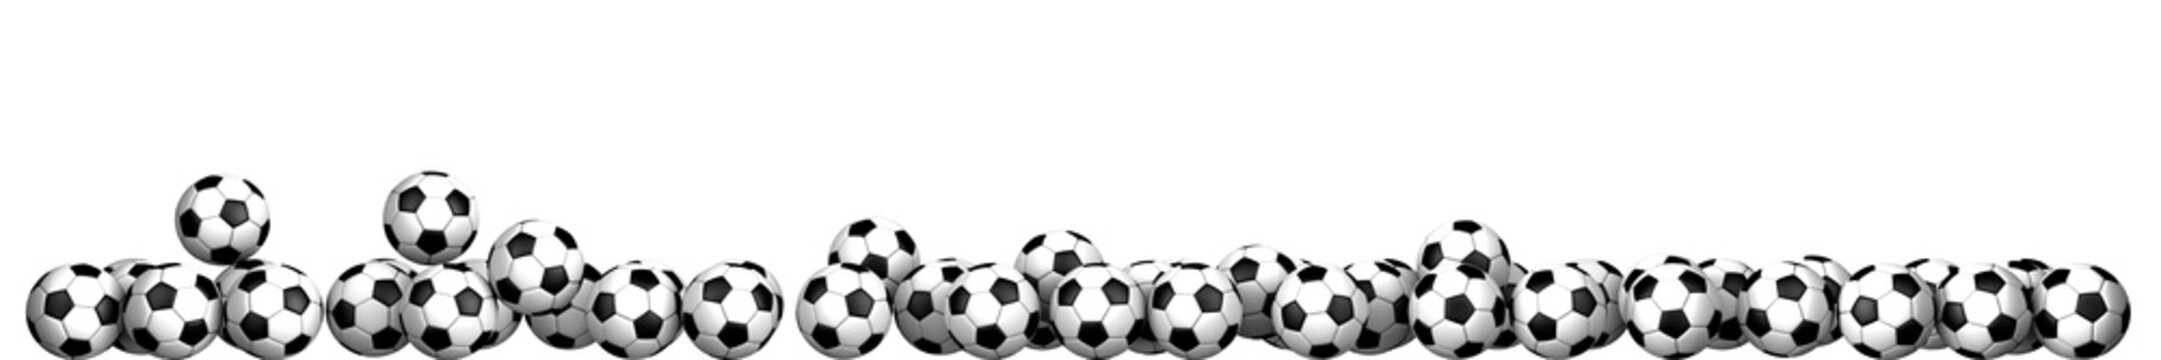 soccer balloon frame on a white background